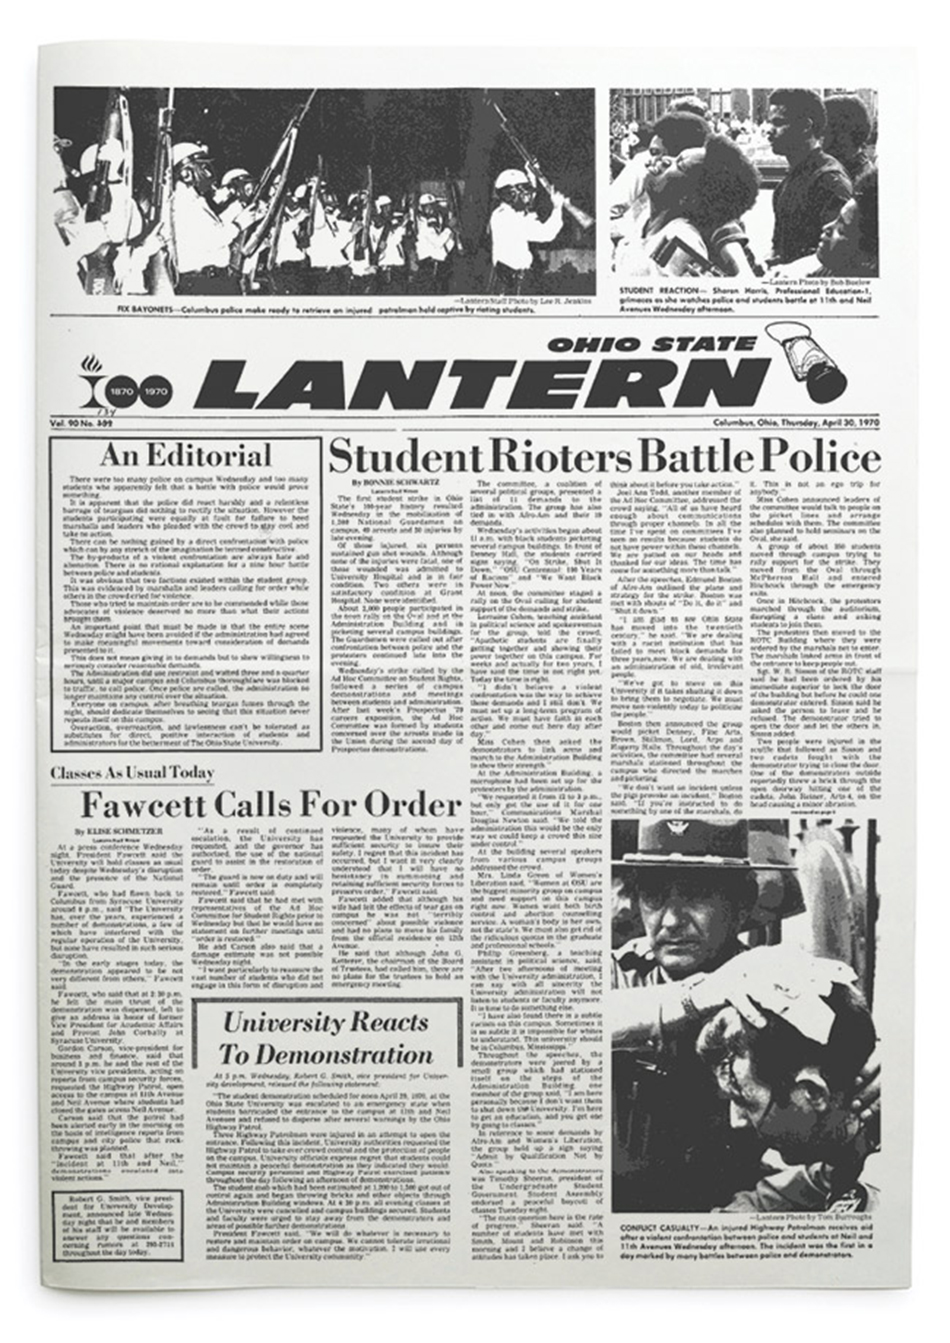 April 30, 1970 Lantern front cover